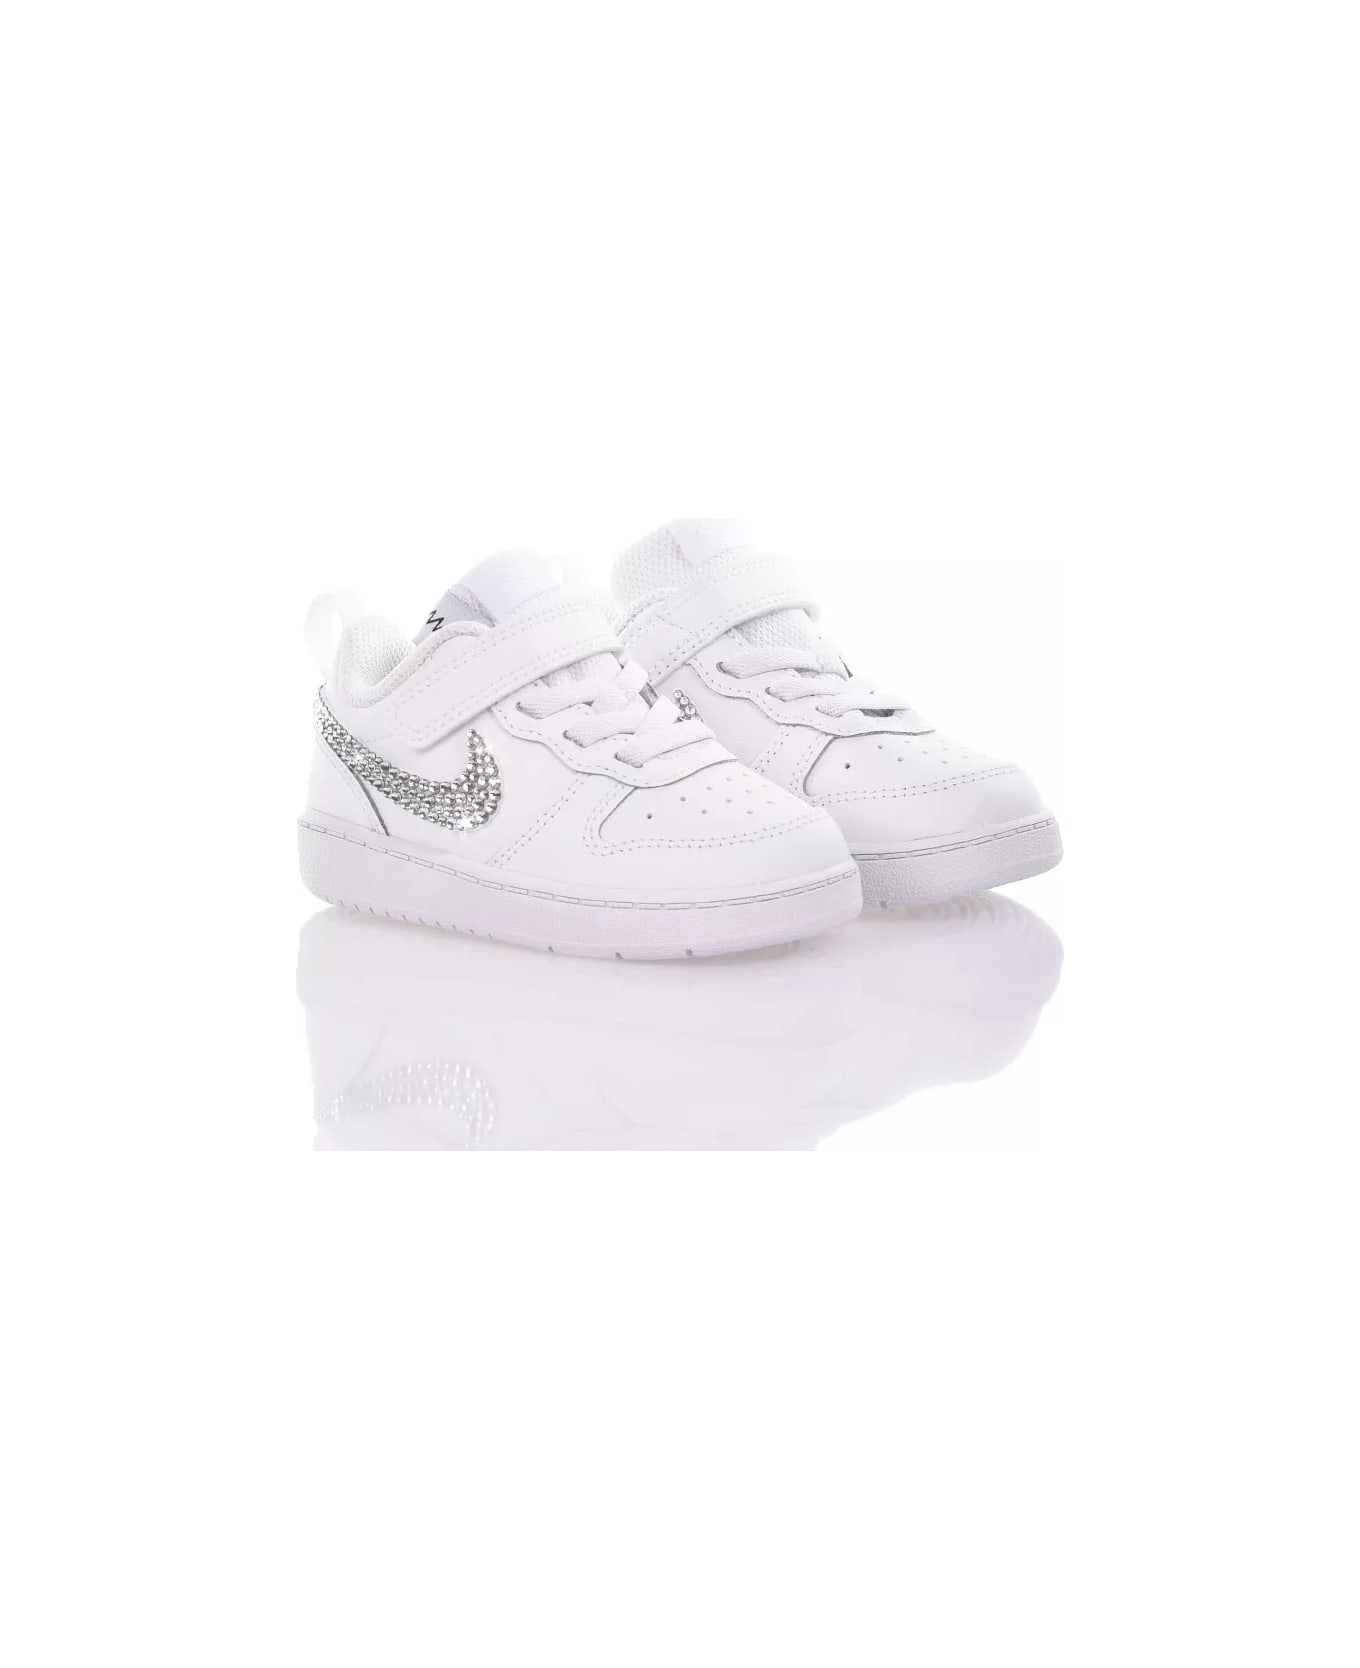 Mimanera Nike Baby Swarovski Custom